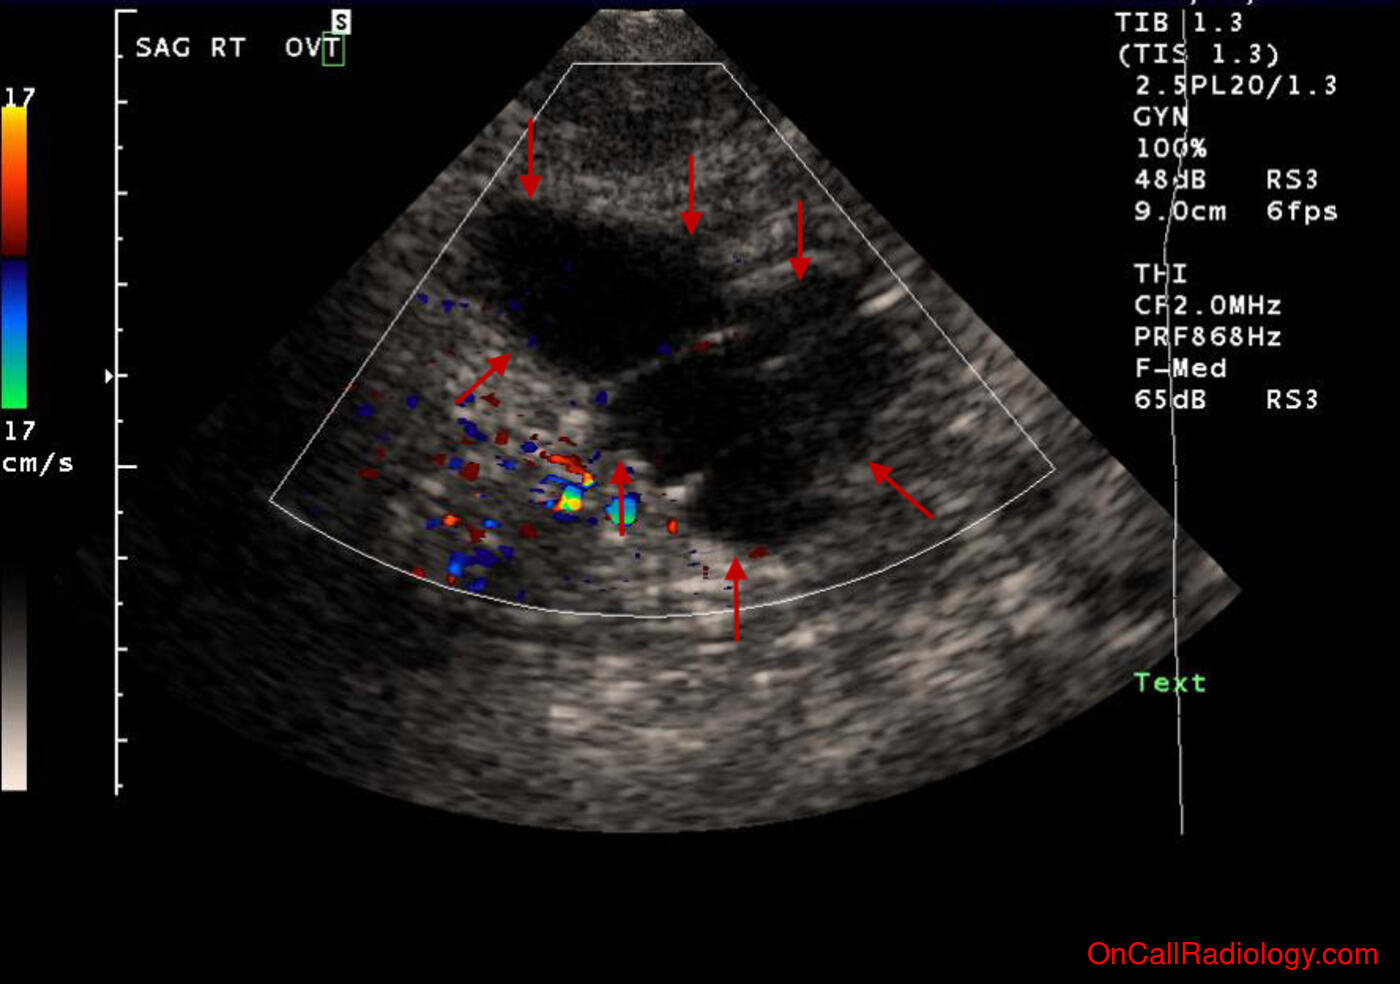 Female (Right hydrosalpinx and uterine fibroids - Ultrasound, CT)